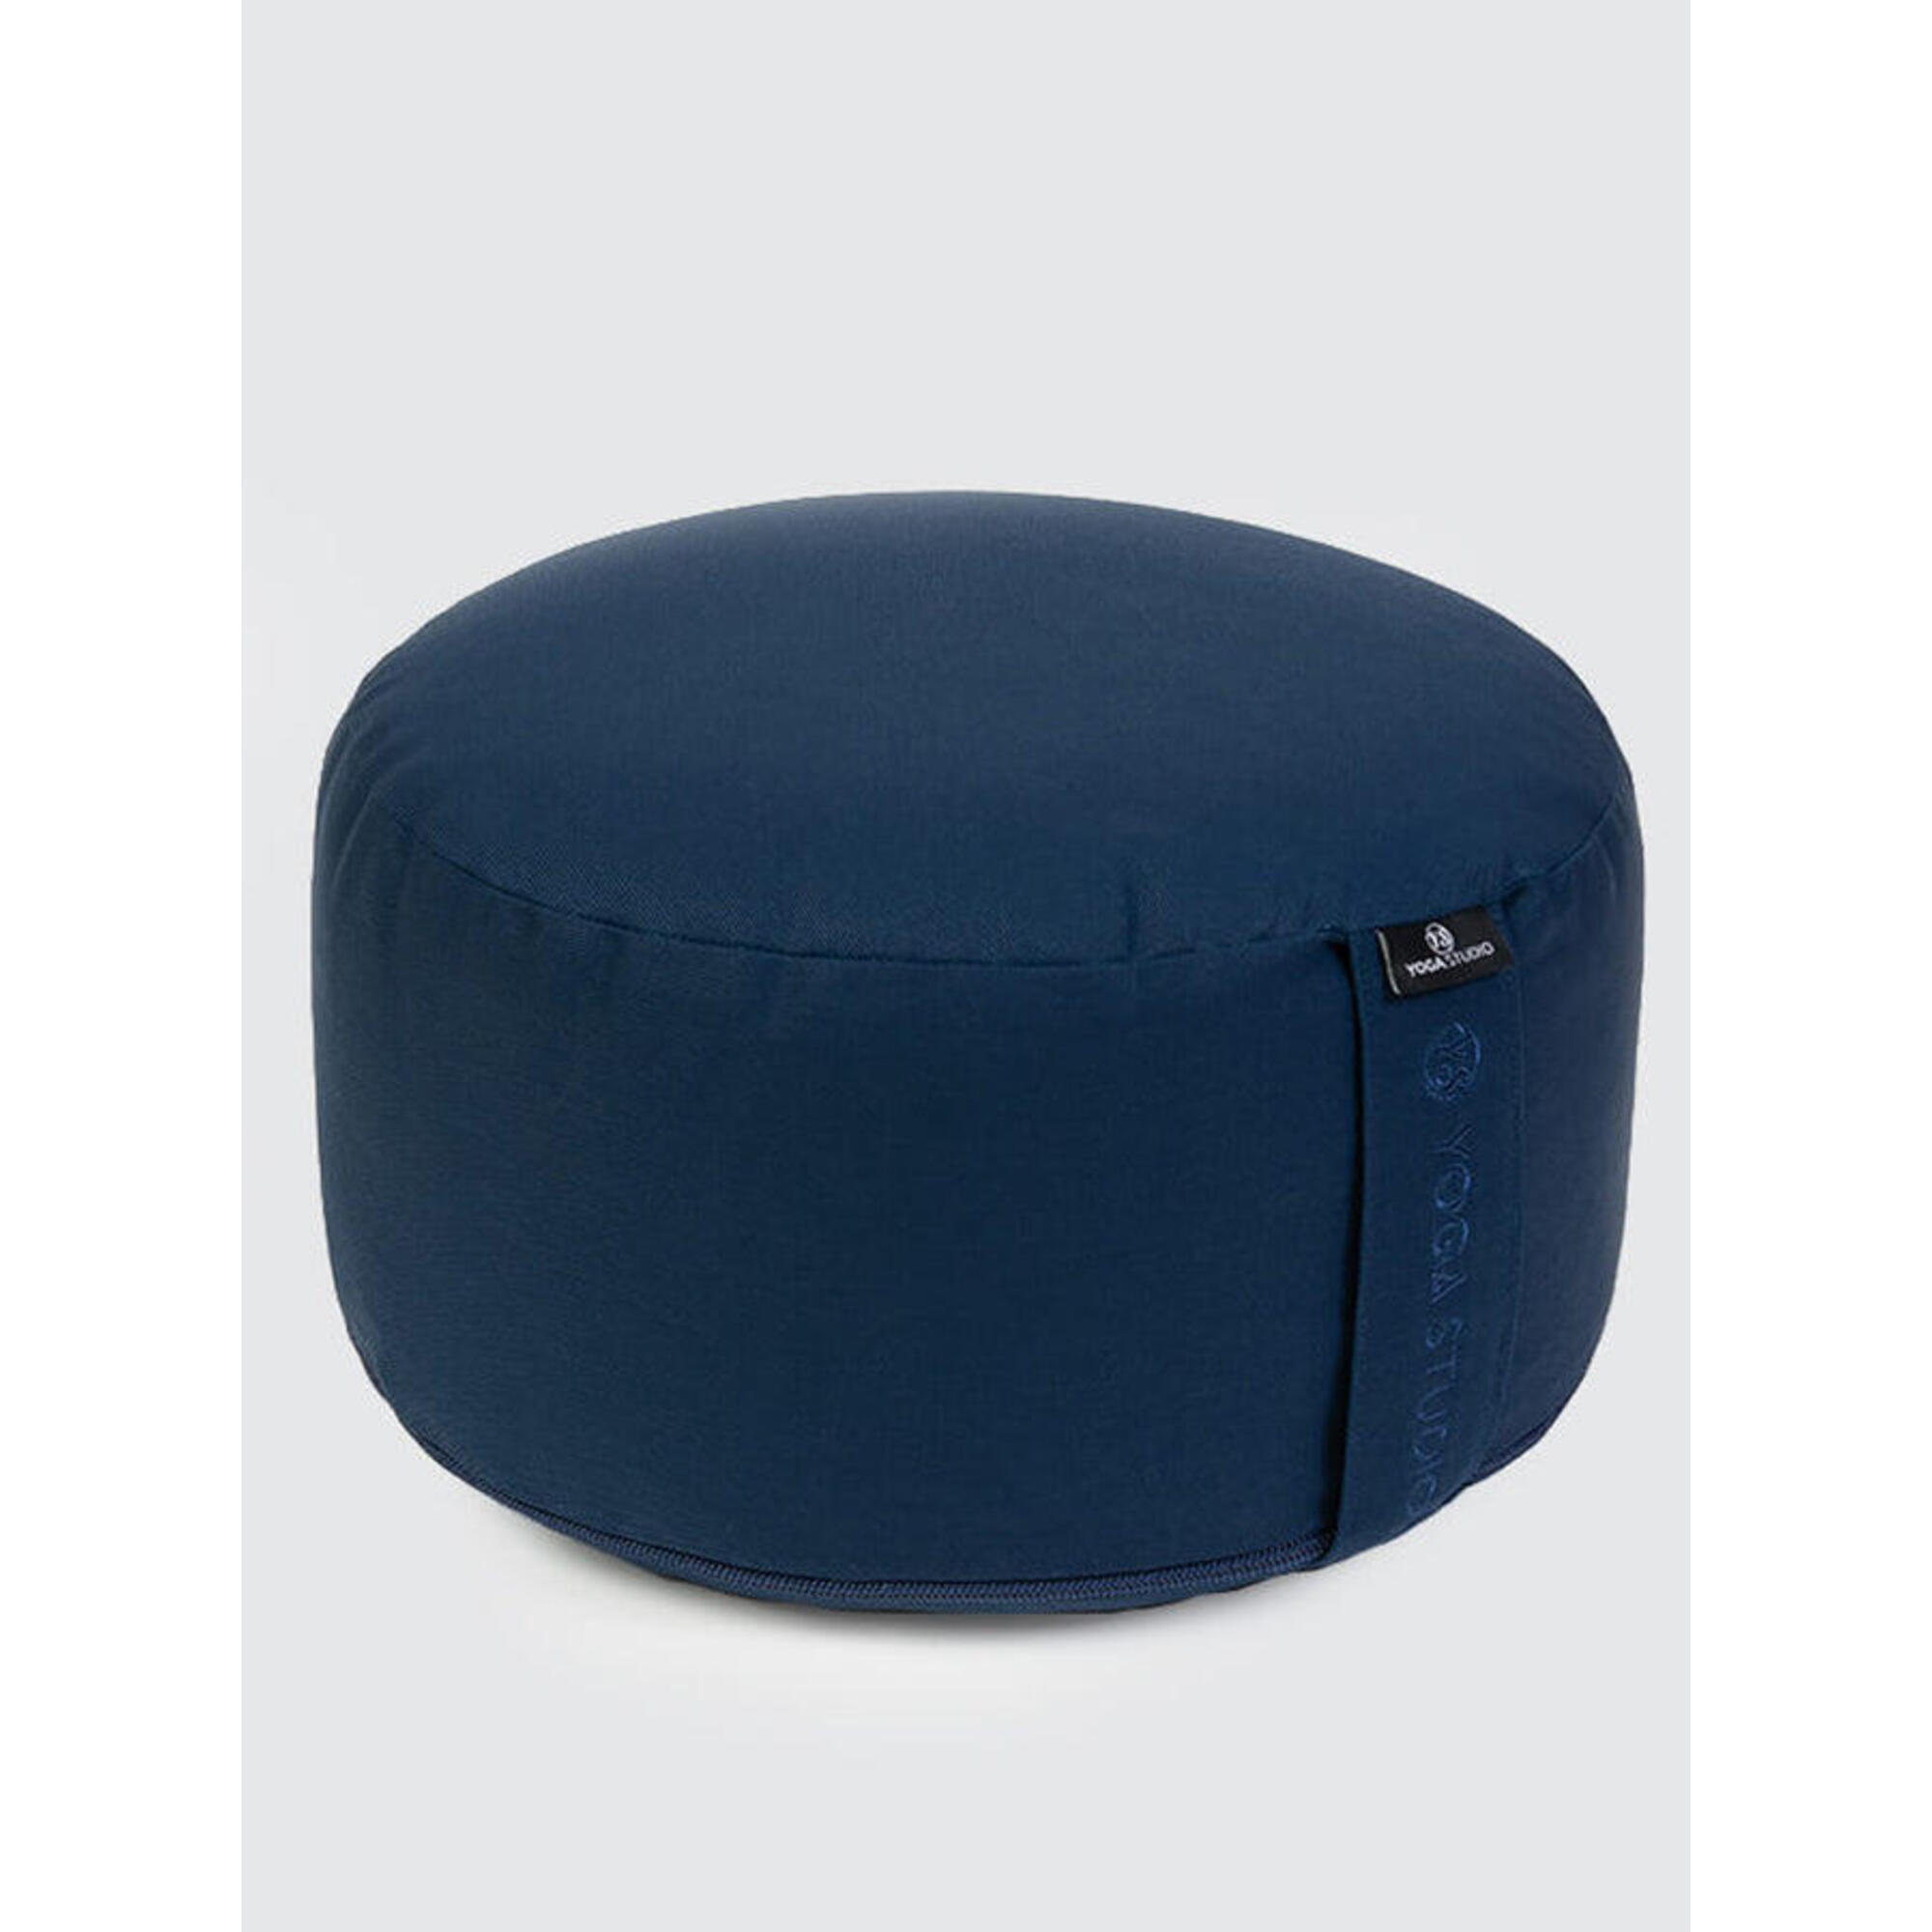 Yoga Studio Cylinder Meditation Cushion - Navy Blue 1/3